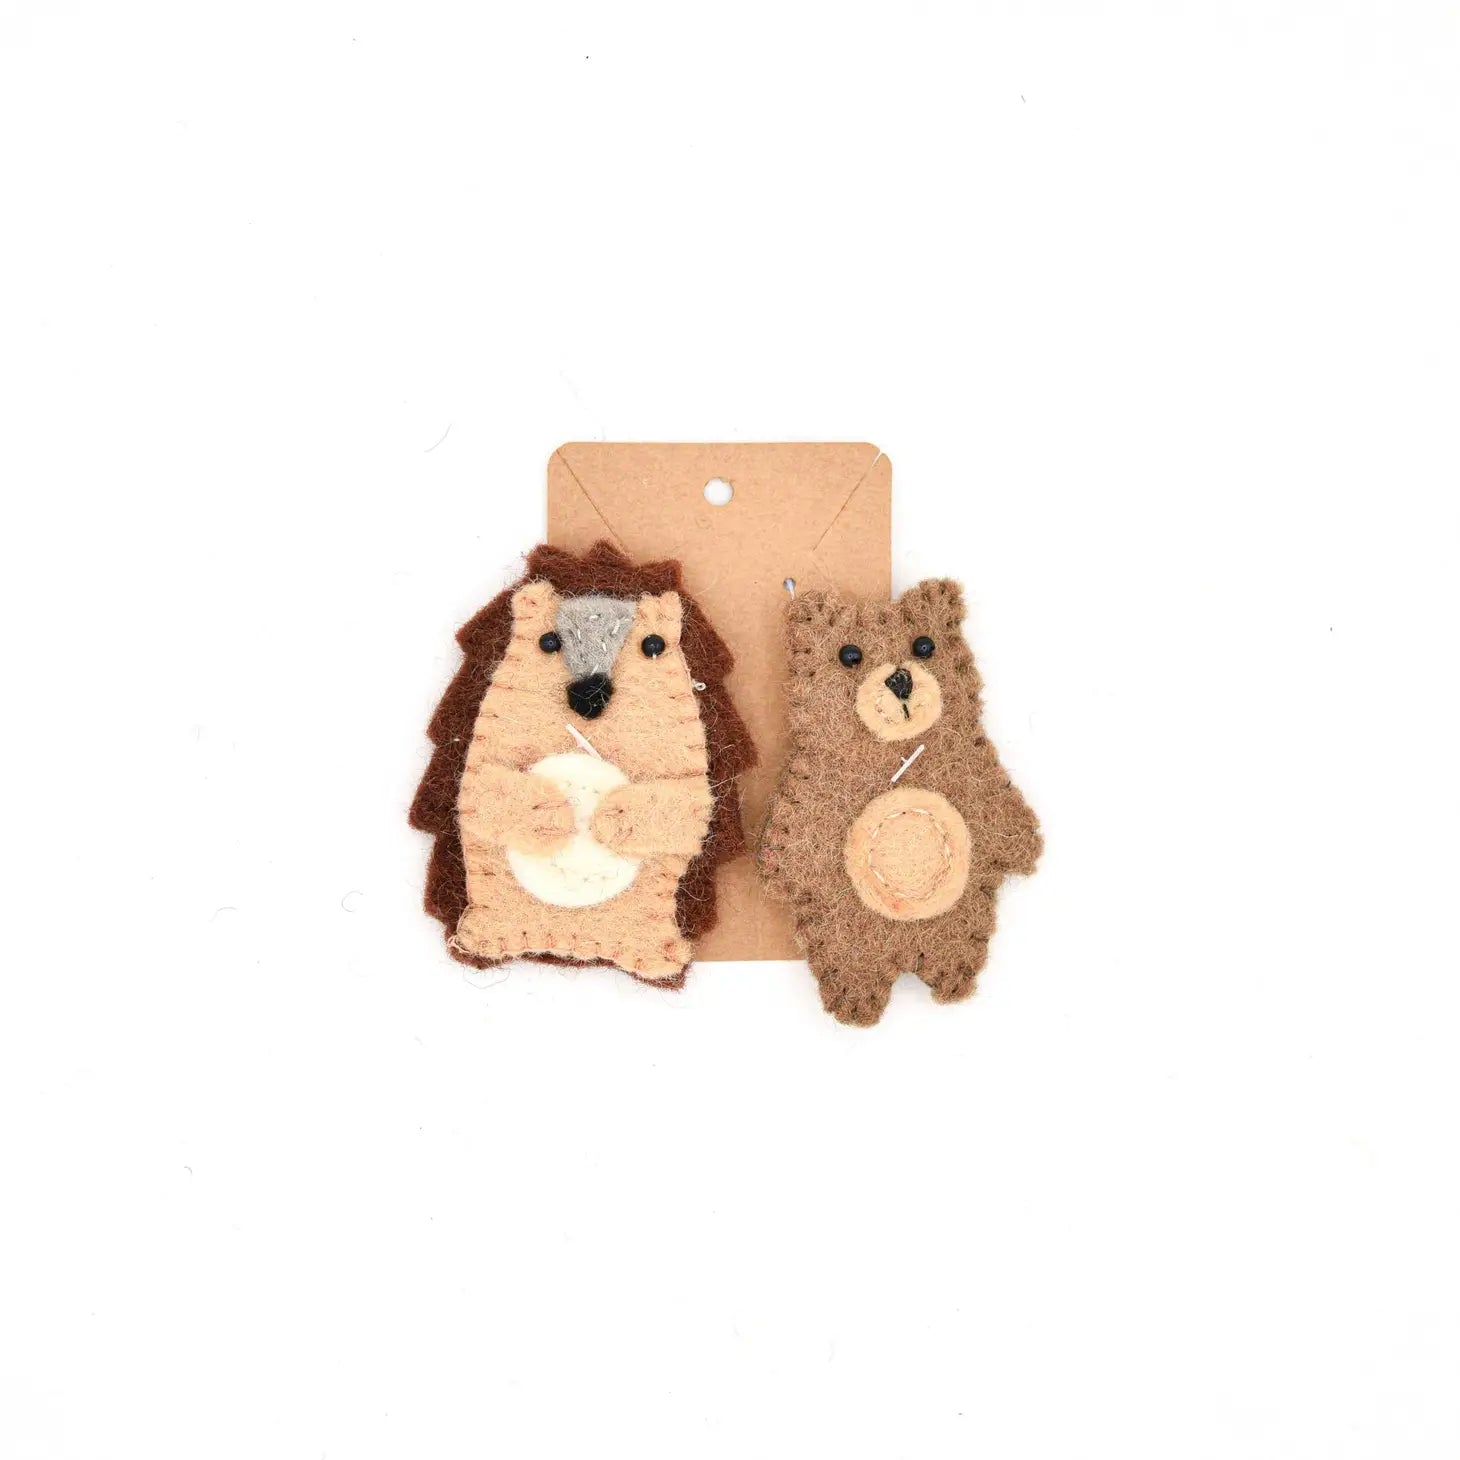 Hedgehog and bear puppet set